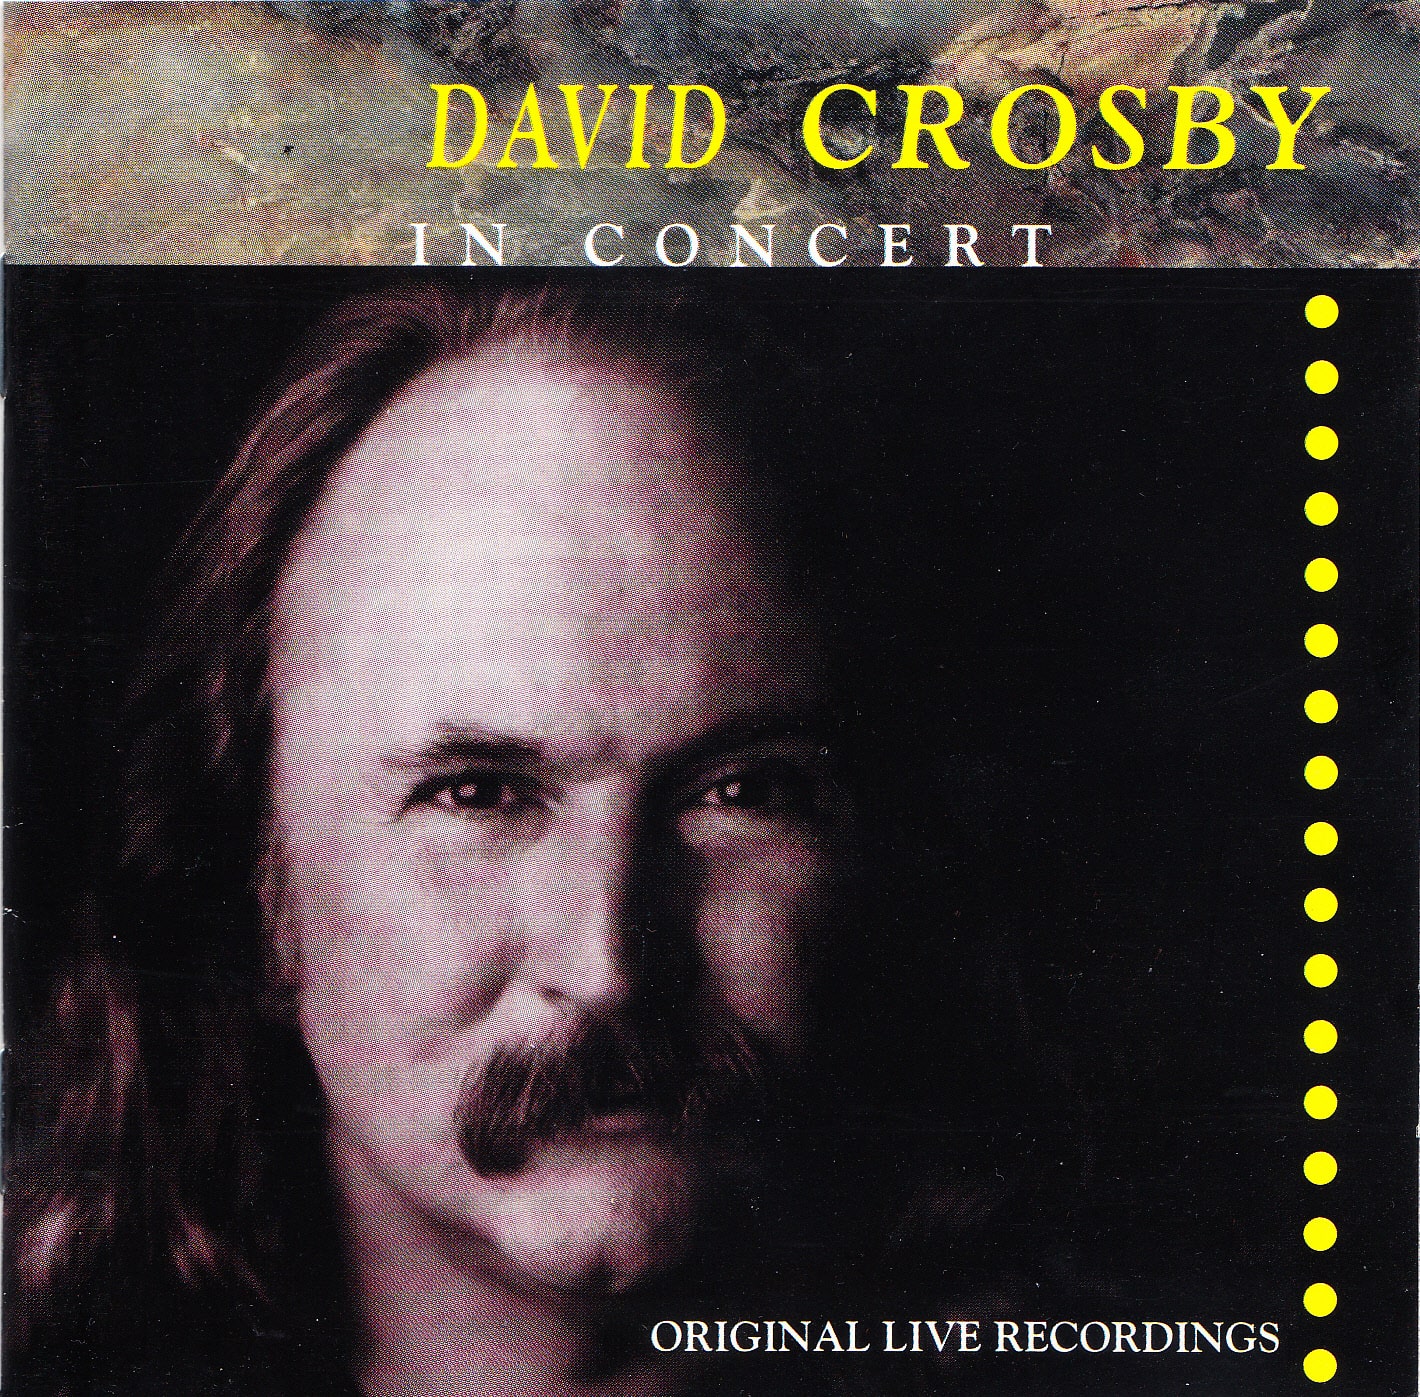 Crosby in concert